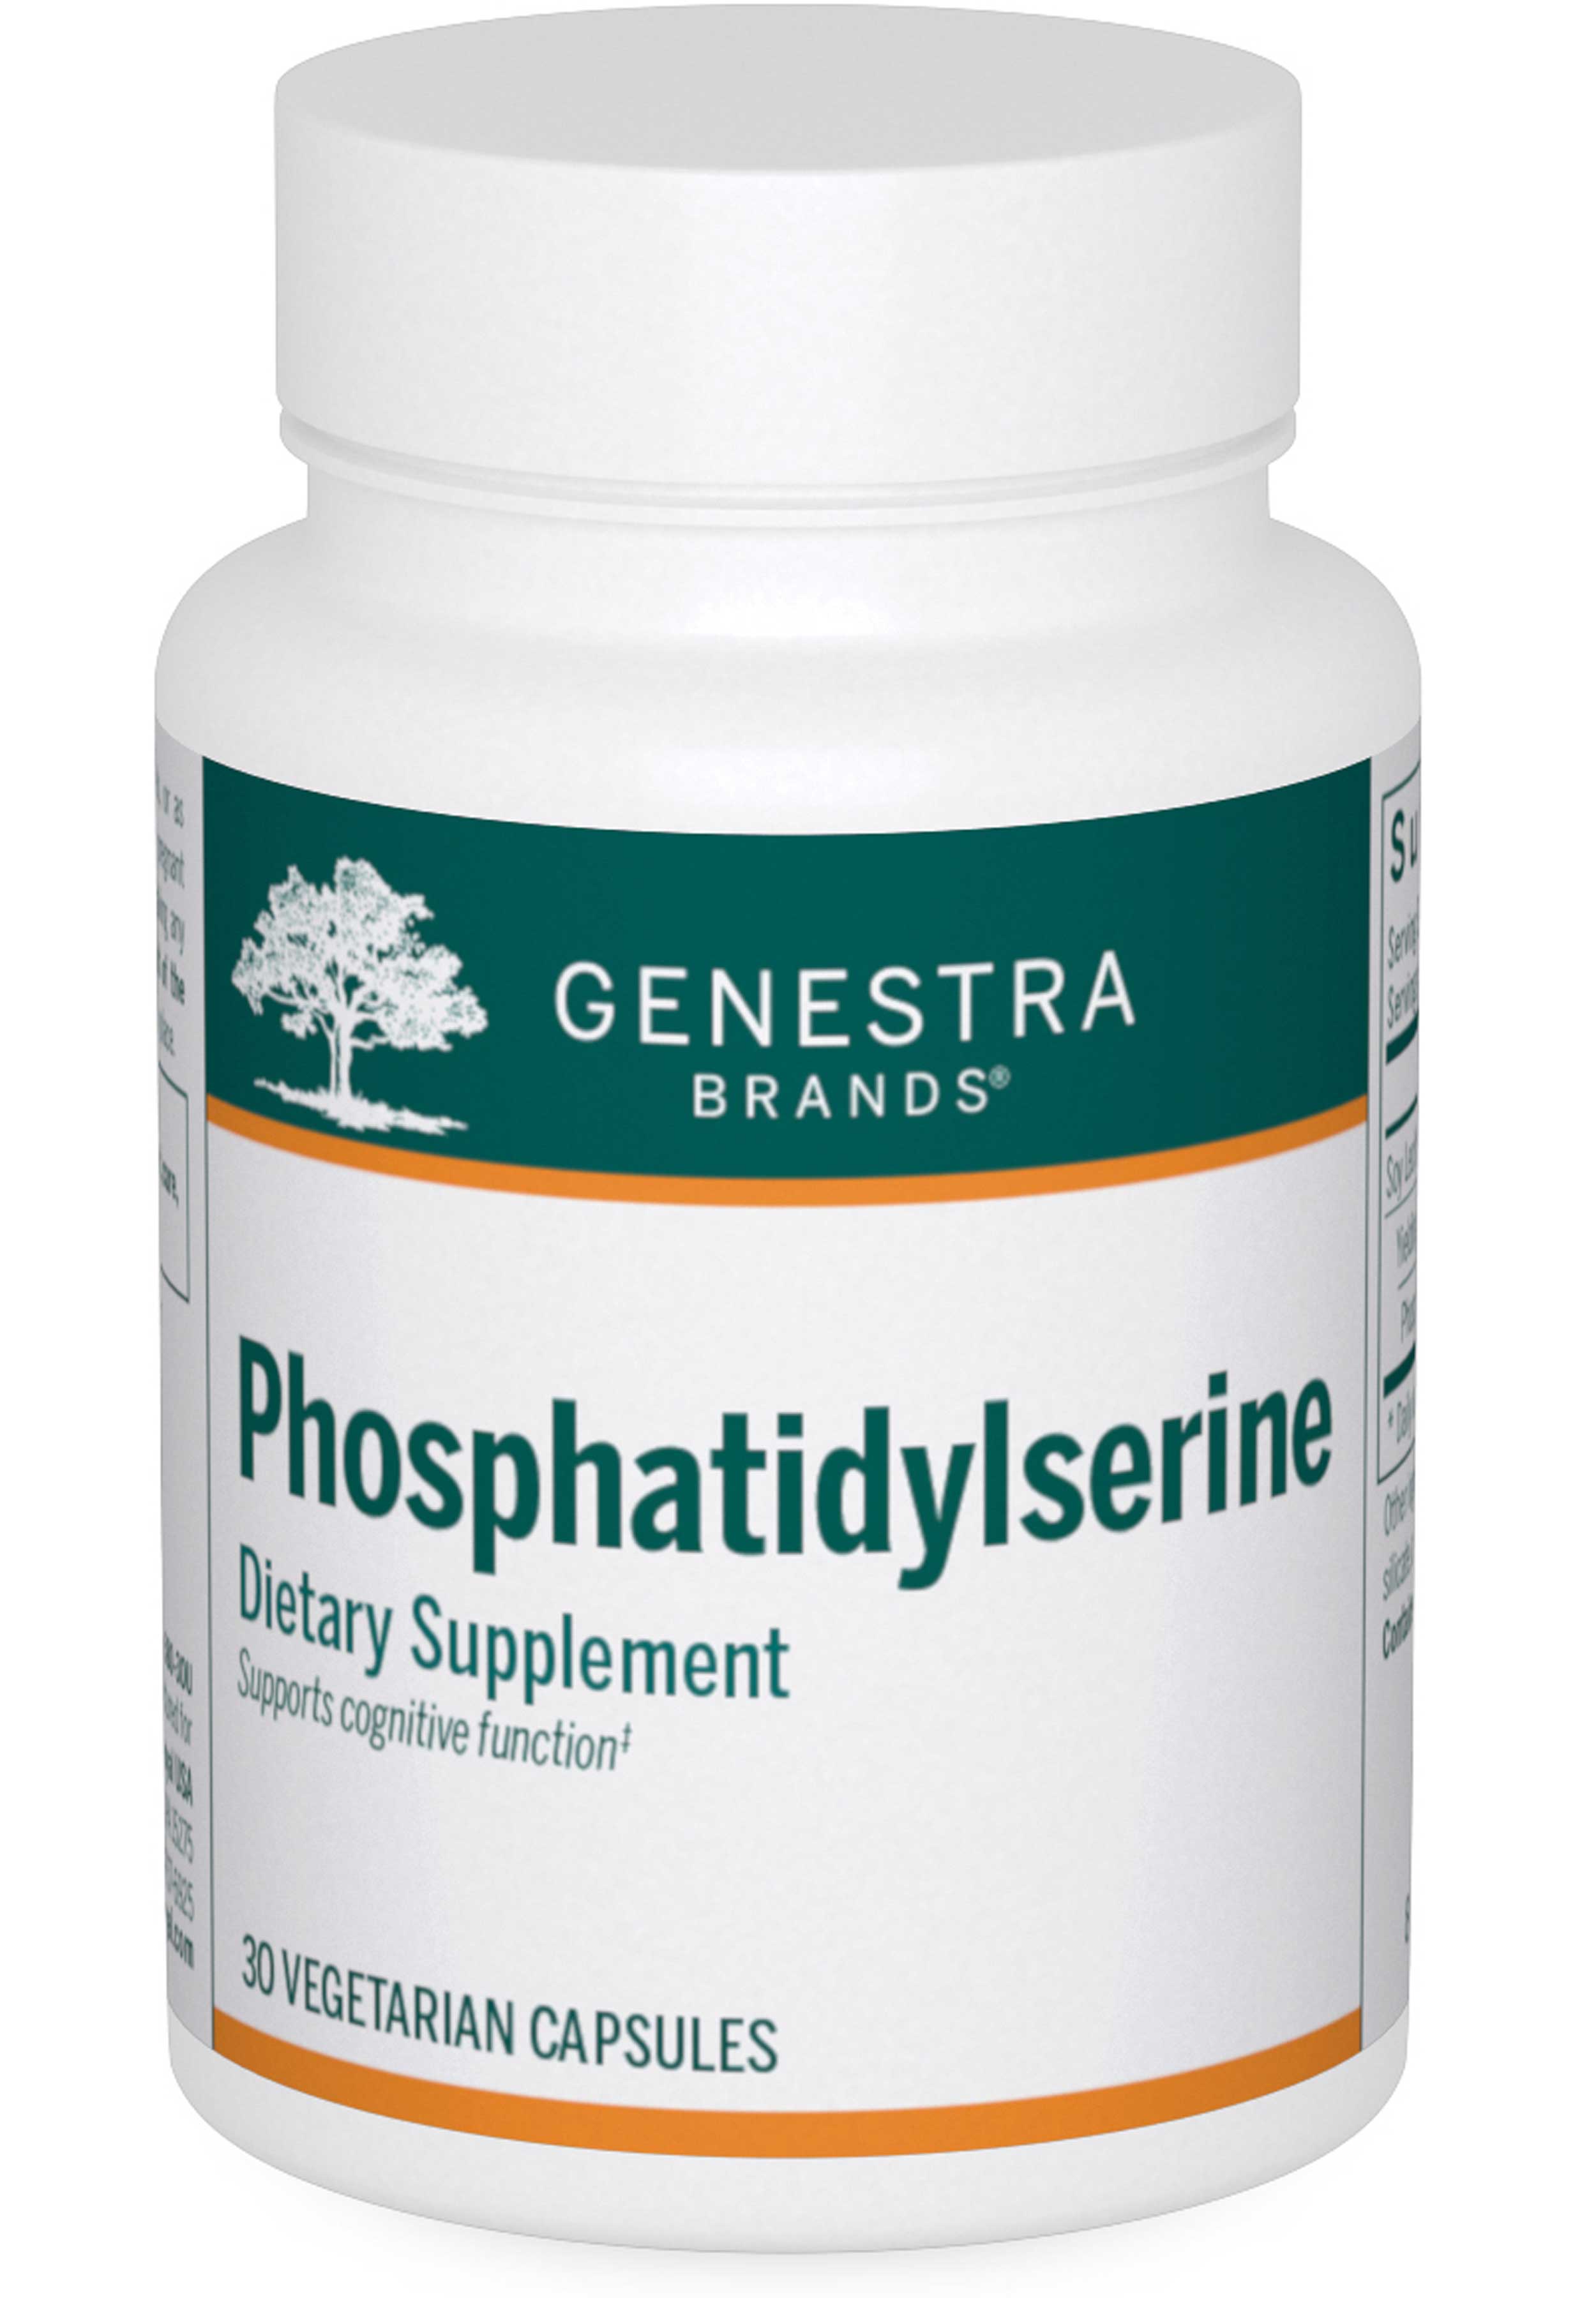 Genestra Brands Phosphatidylserine